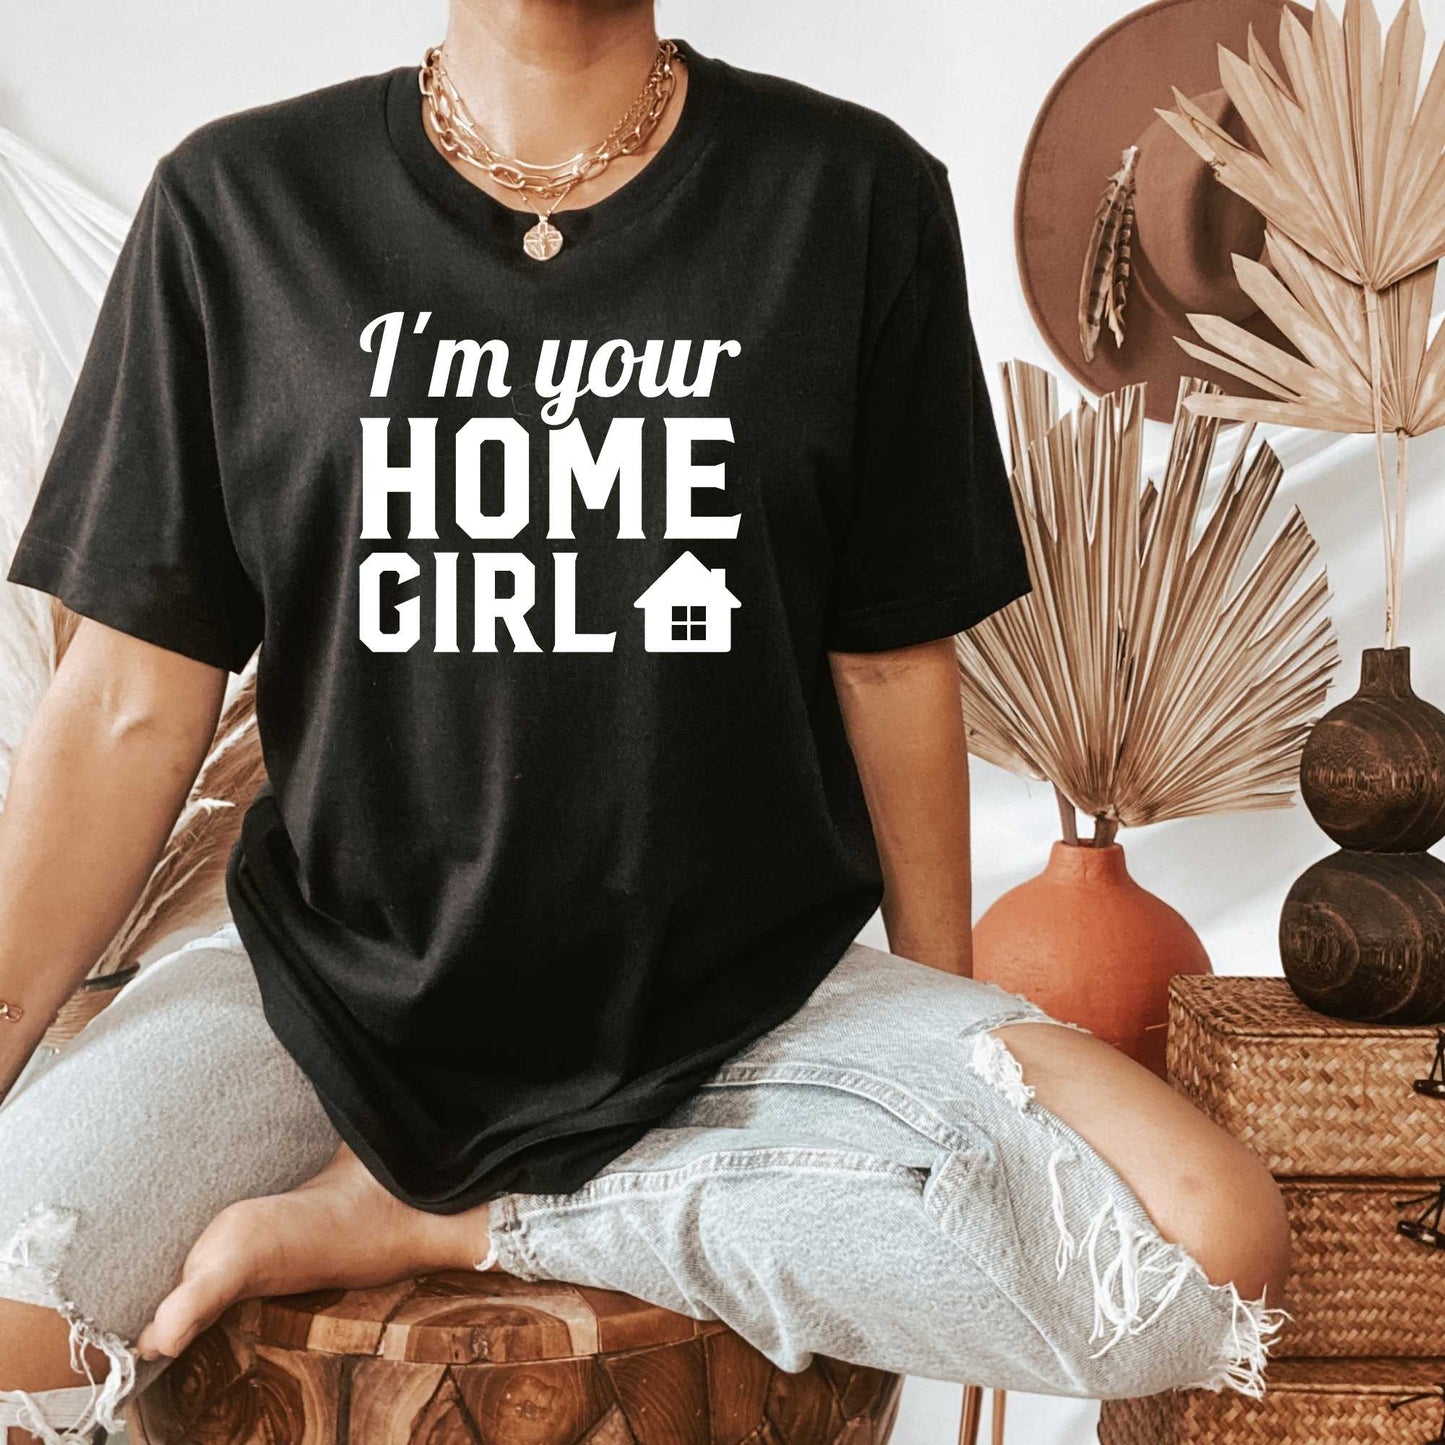 Home Girl Realtor Shirt, Funny Real Estate Shirt, Real Estate Agent Gift, Great for Real Estate Marketing